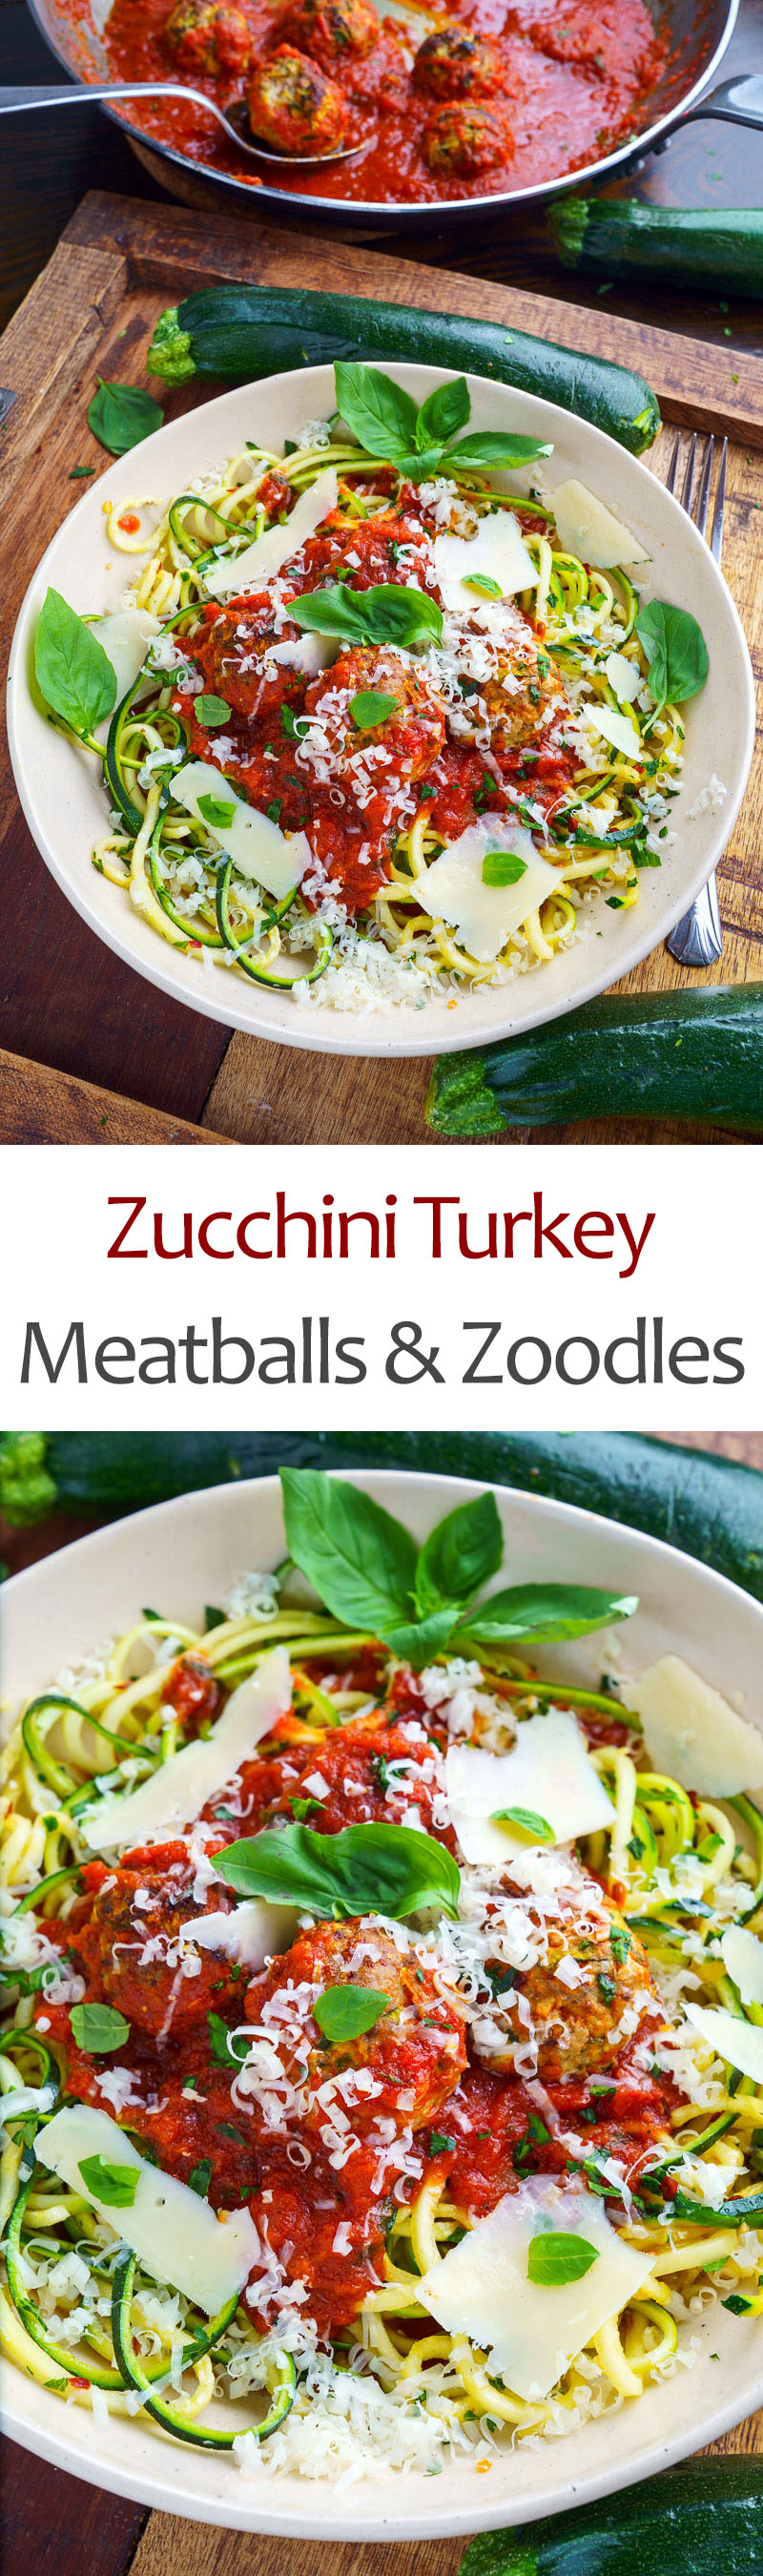 Zucchini Turkey Meatballs in Marinara on Zoodles